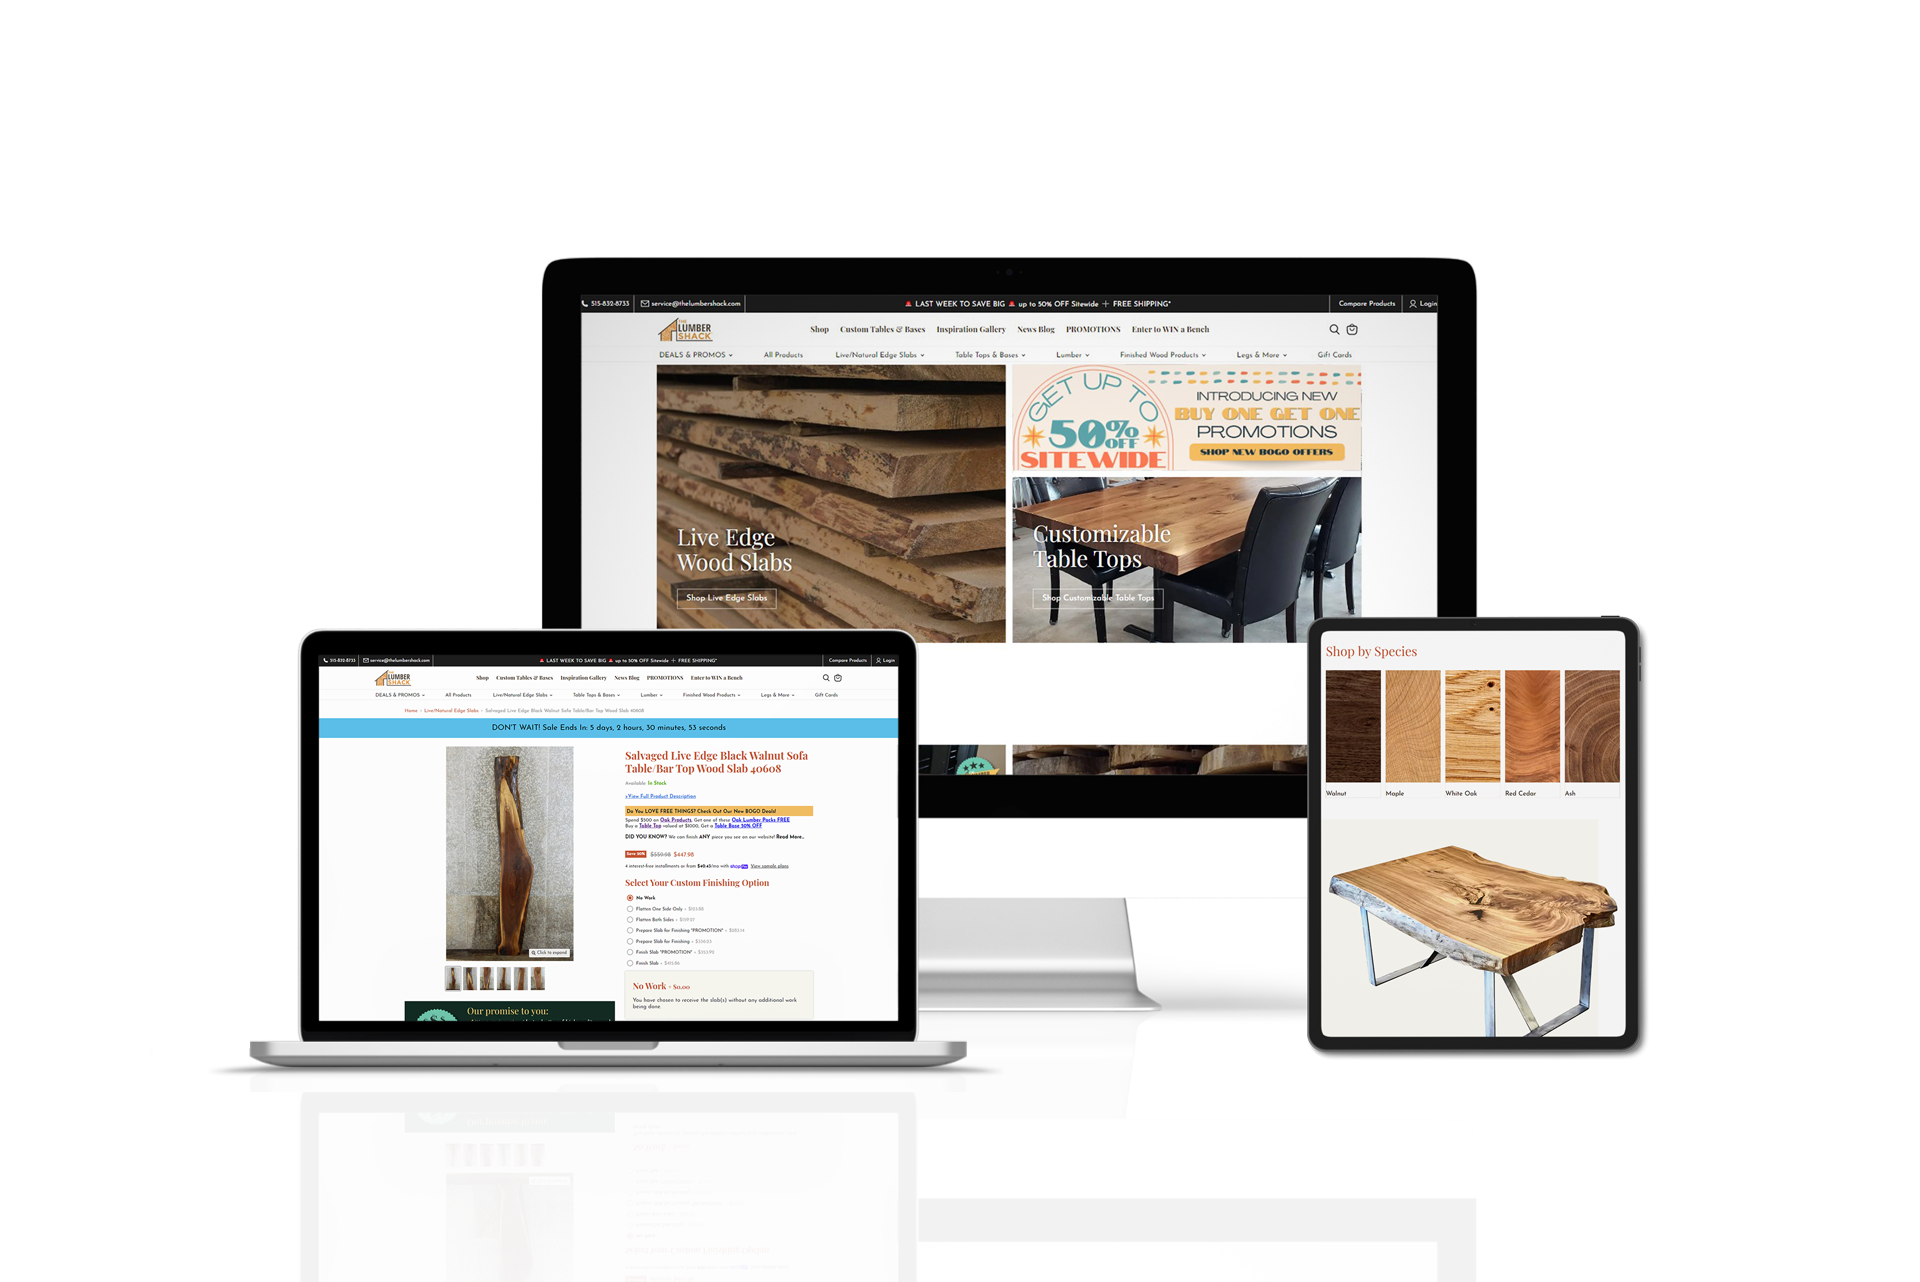 Mockups of the Lumber Shack's website on desktop, laptop, and tablet devices